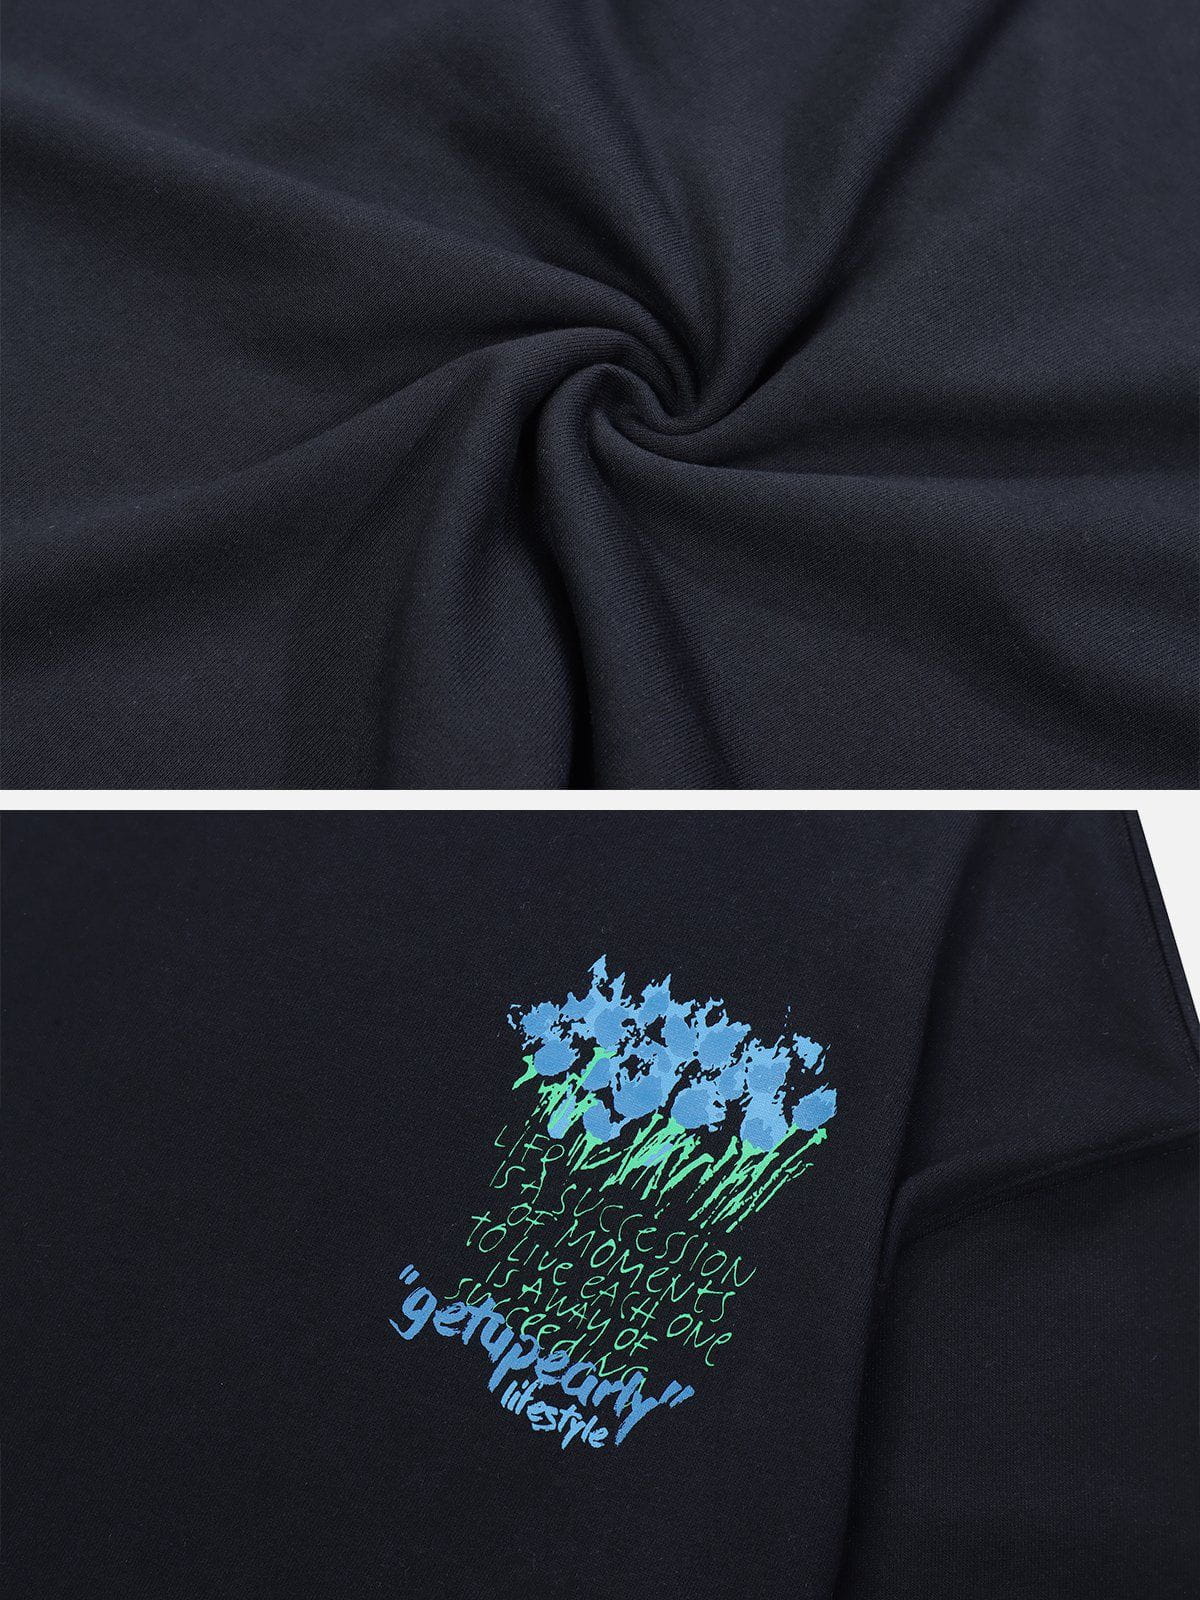 LUXENFY™ - Graffiti Floral Print Sweatshirt luxenfy.com